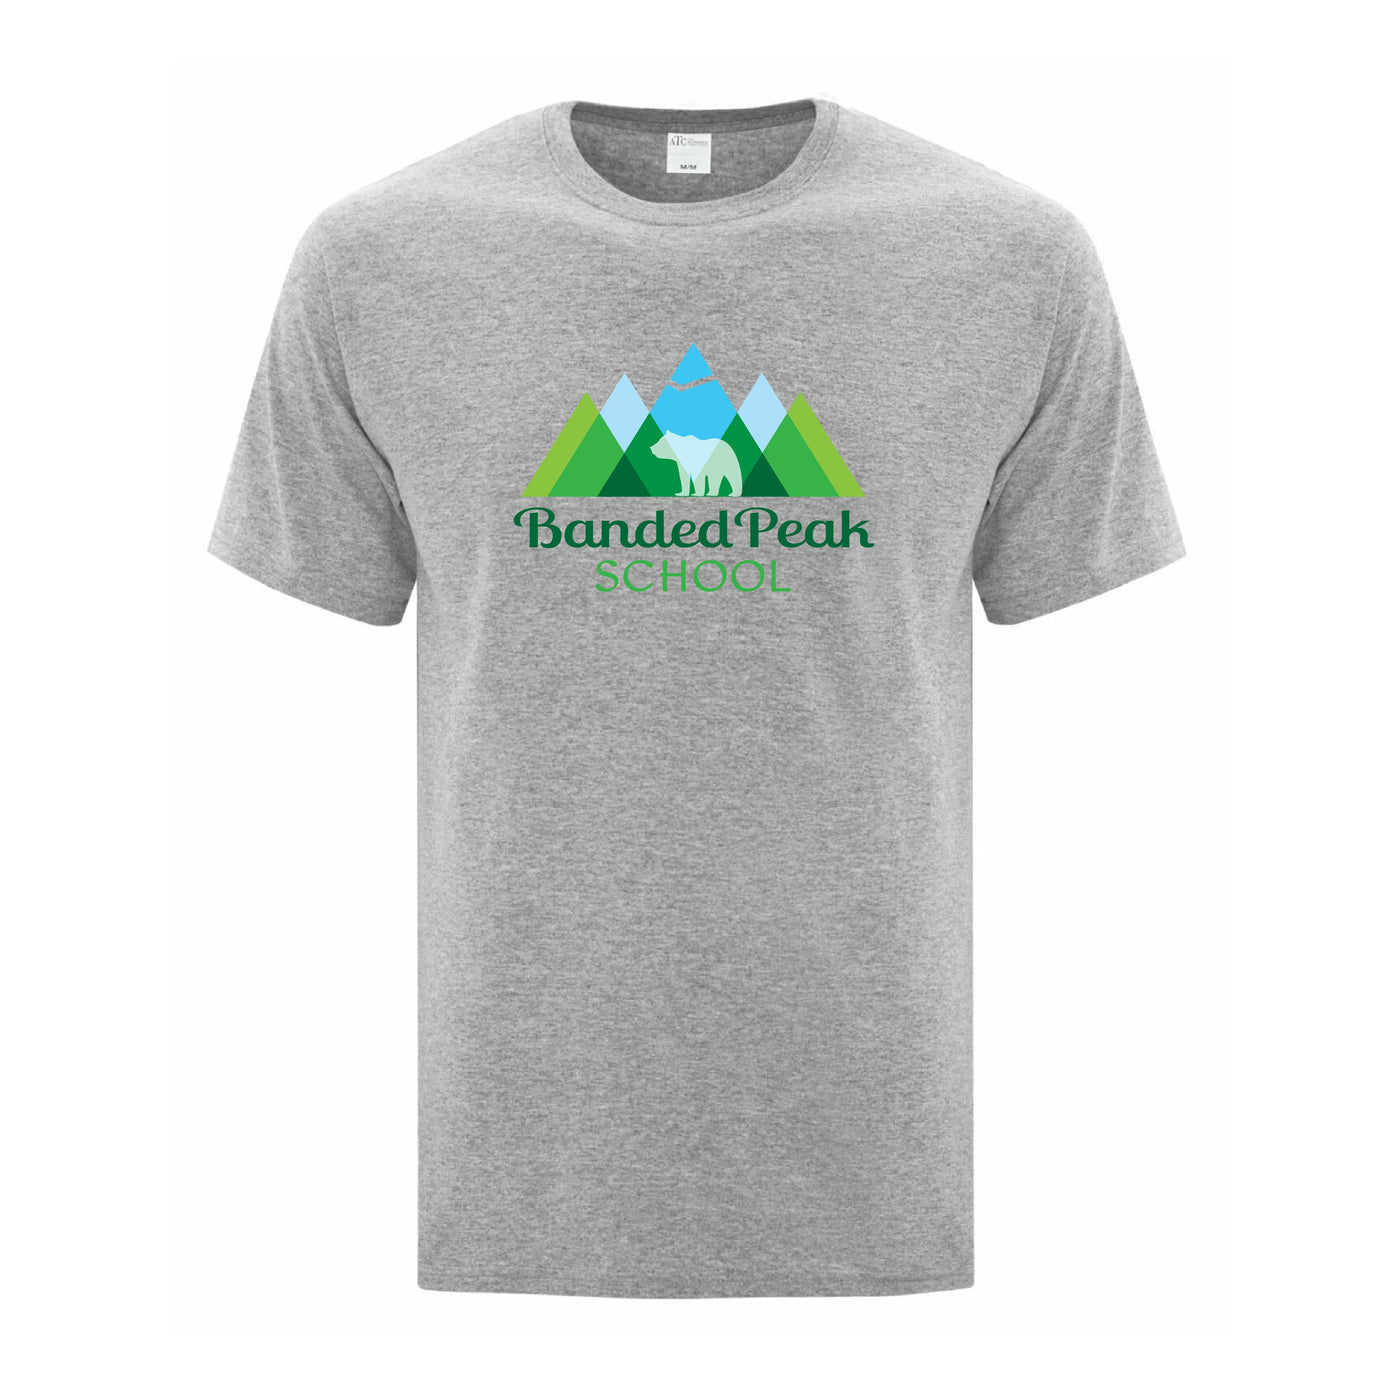 Banded Peak School - Logo Tee - Technical T-Shirt (Grey)